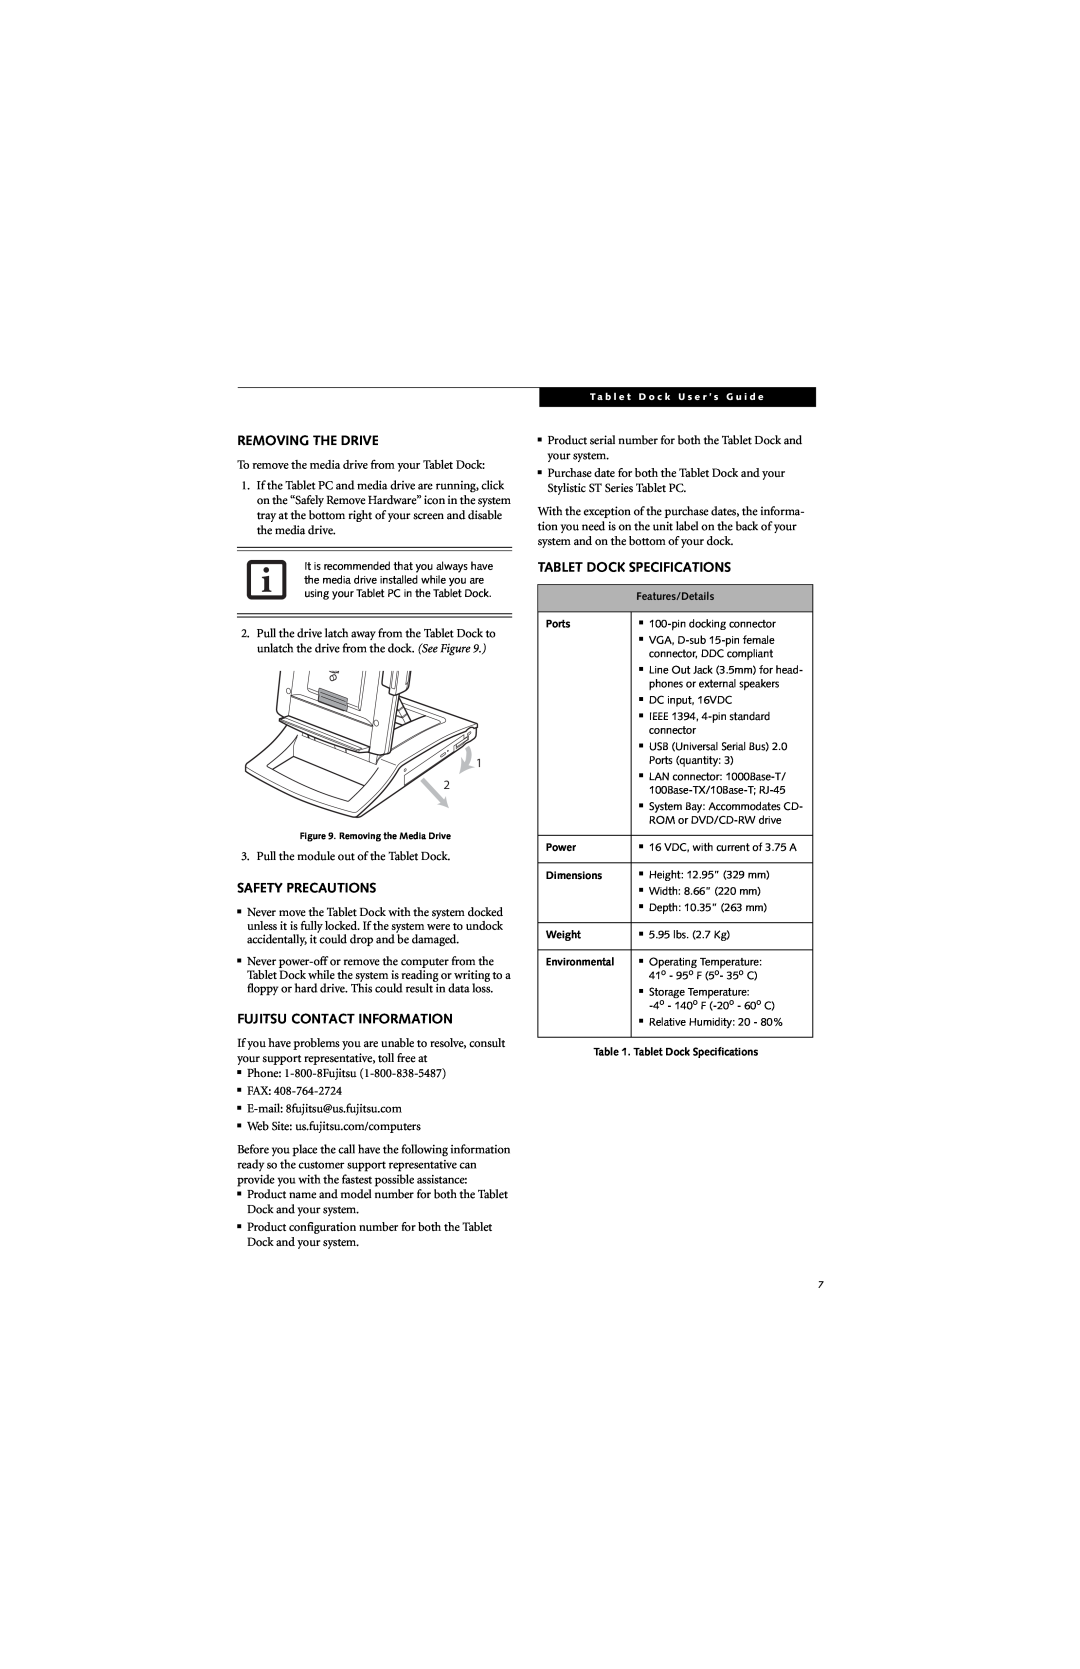 Fujitsu Siemens Computers Stylistic 5011D manual Removing The Drive, Safety Precautions, Fujitsu Contact Information 